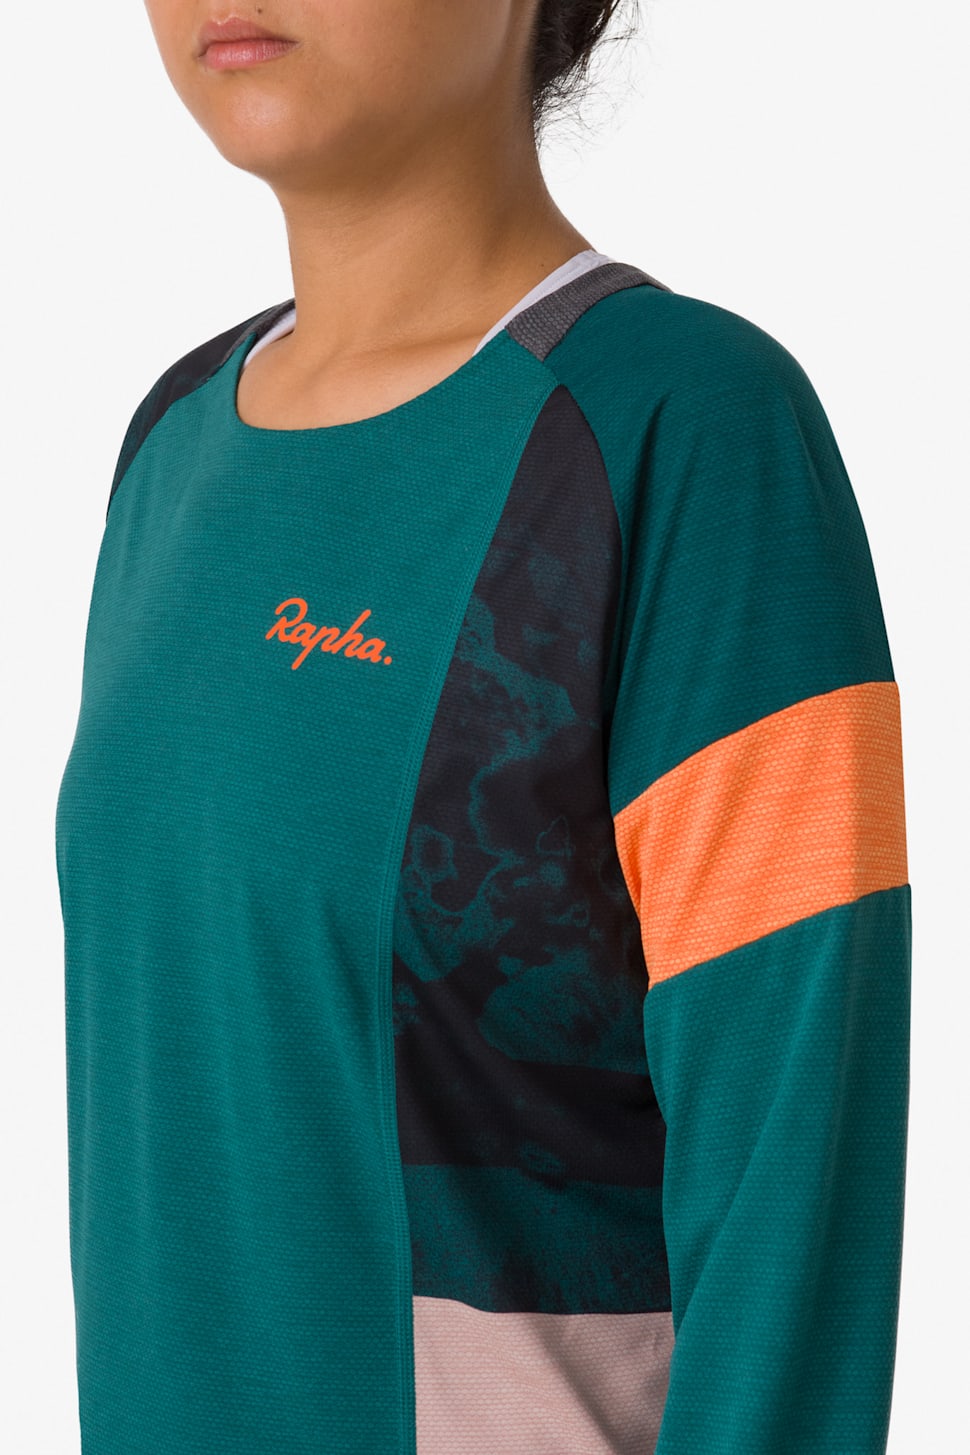 Technical | Long Printed Trail Rapha T-shirt Sleeve Women\'s